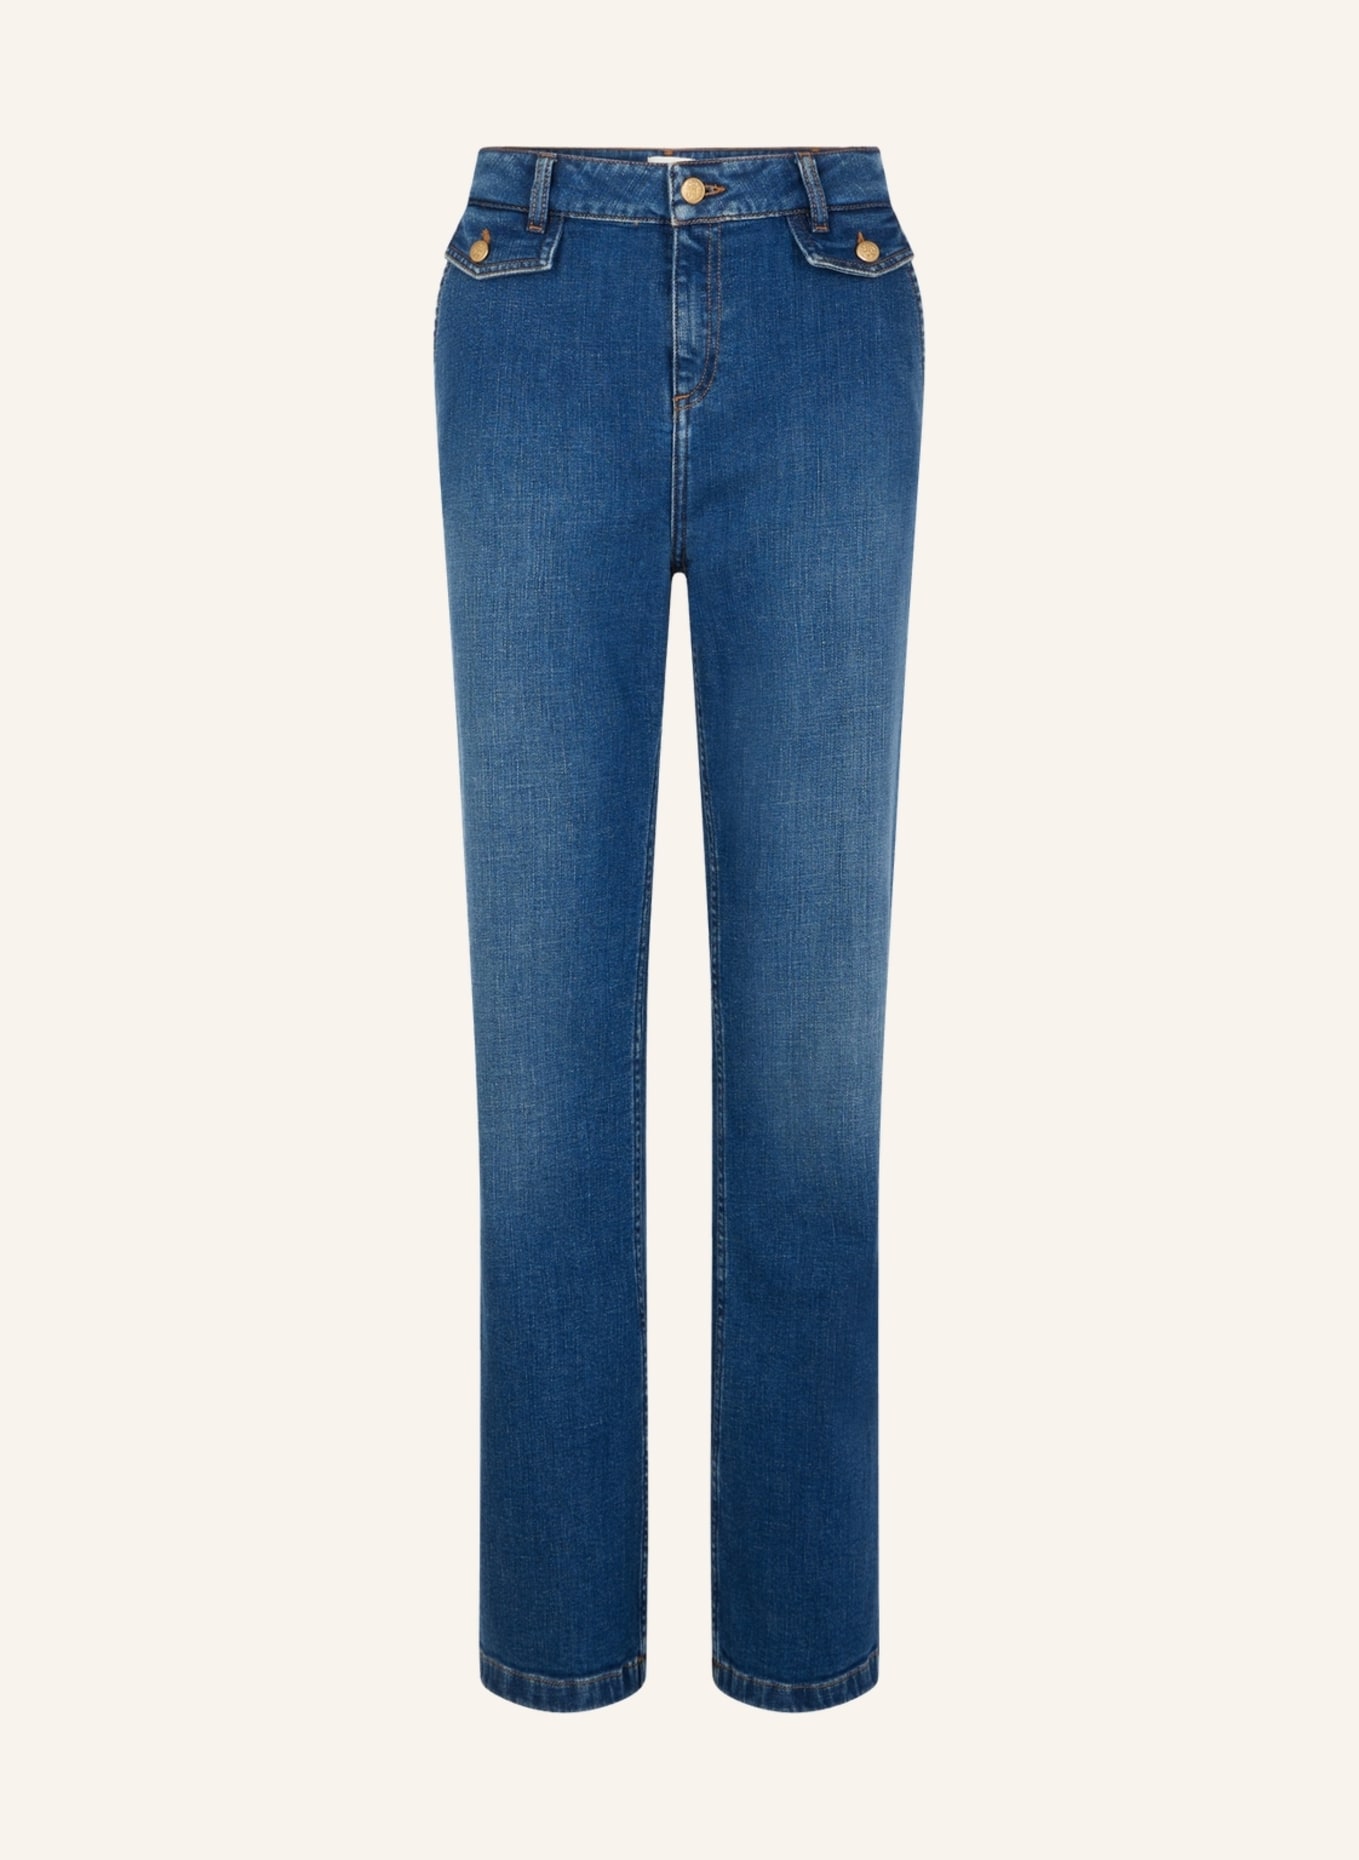 GERARD DAREL Jeans CAMY, Farbe: BLAU (Bild 1)